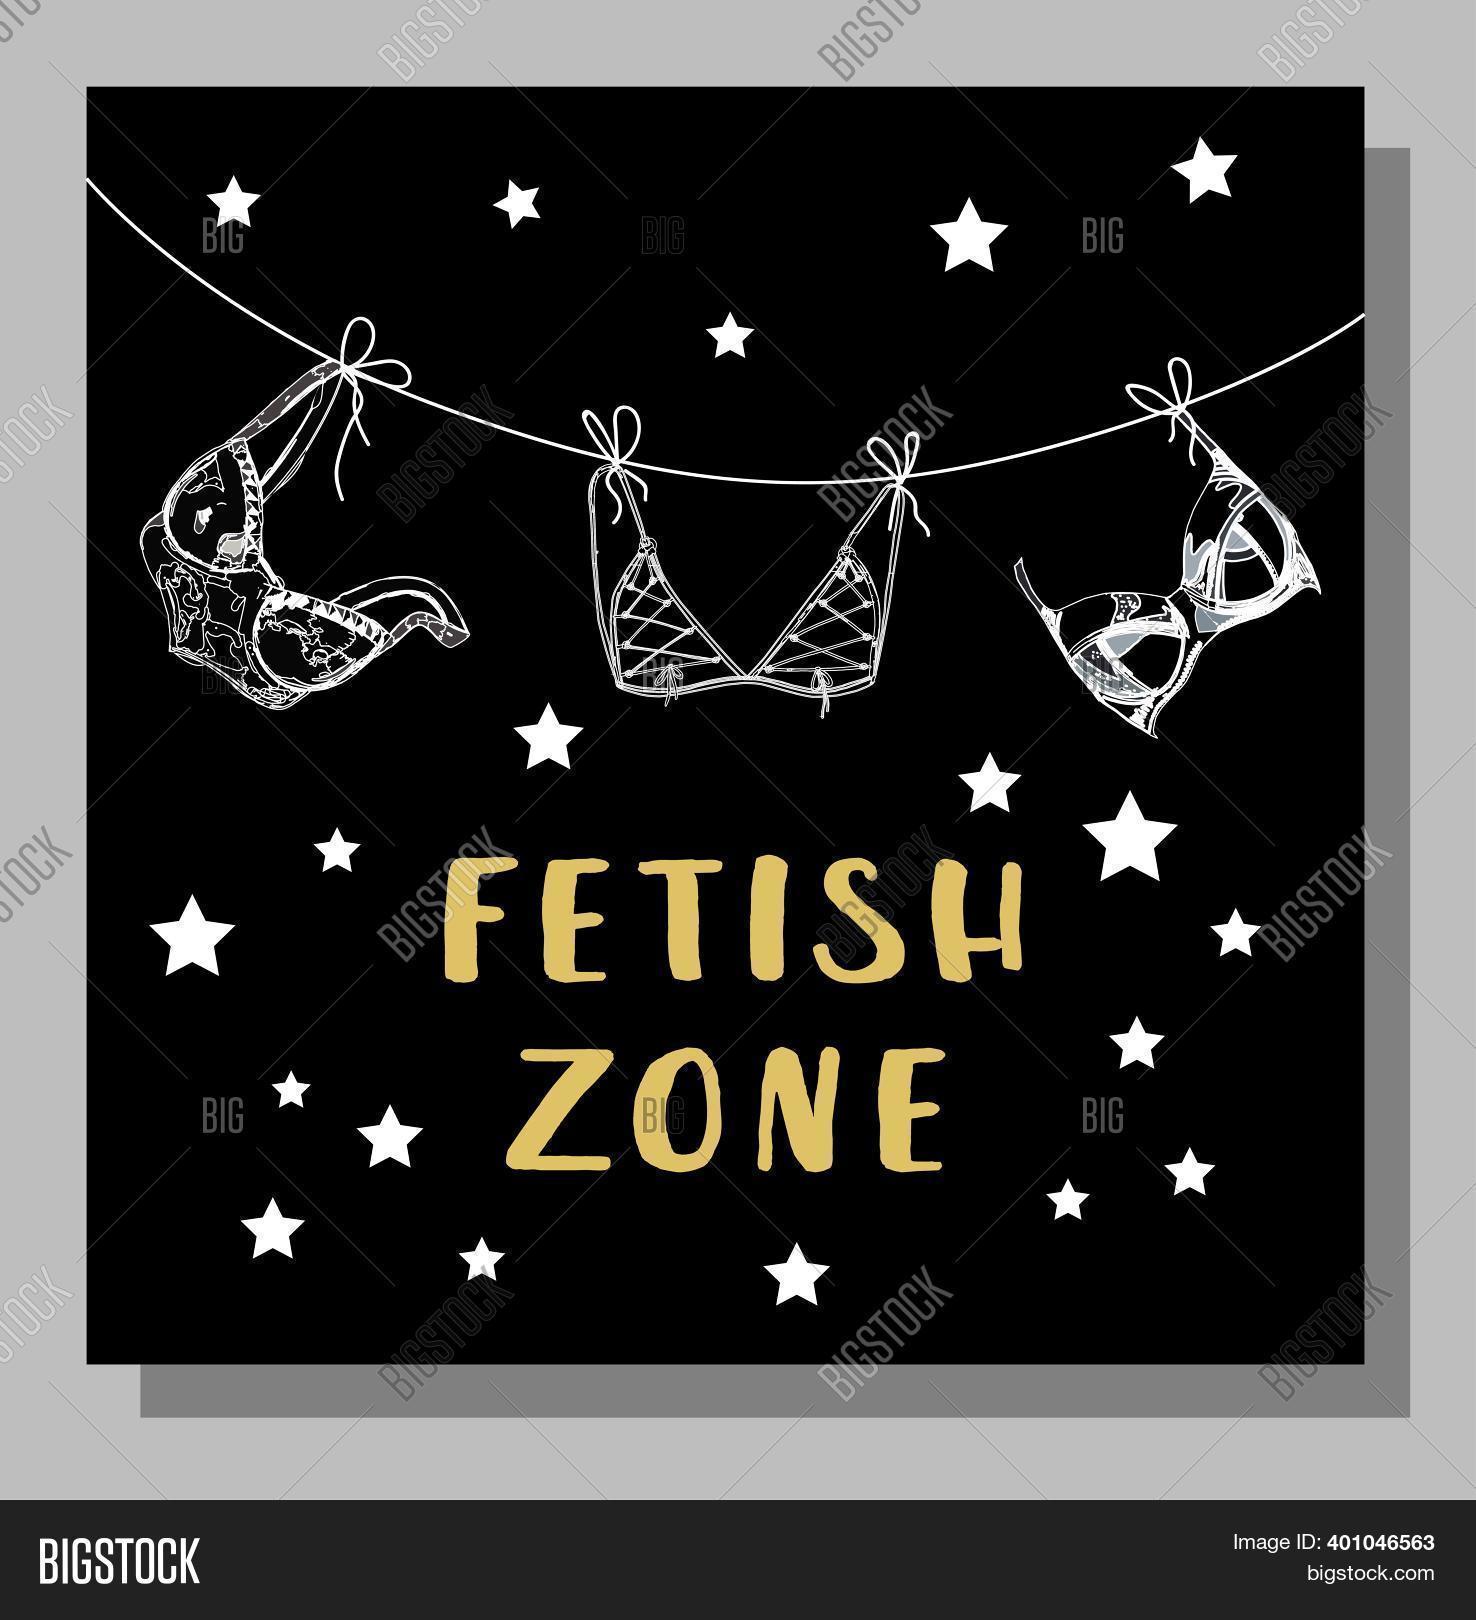 size fetish zone